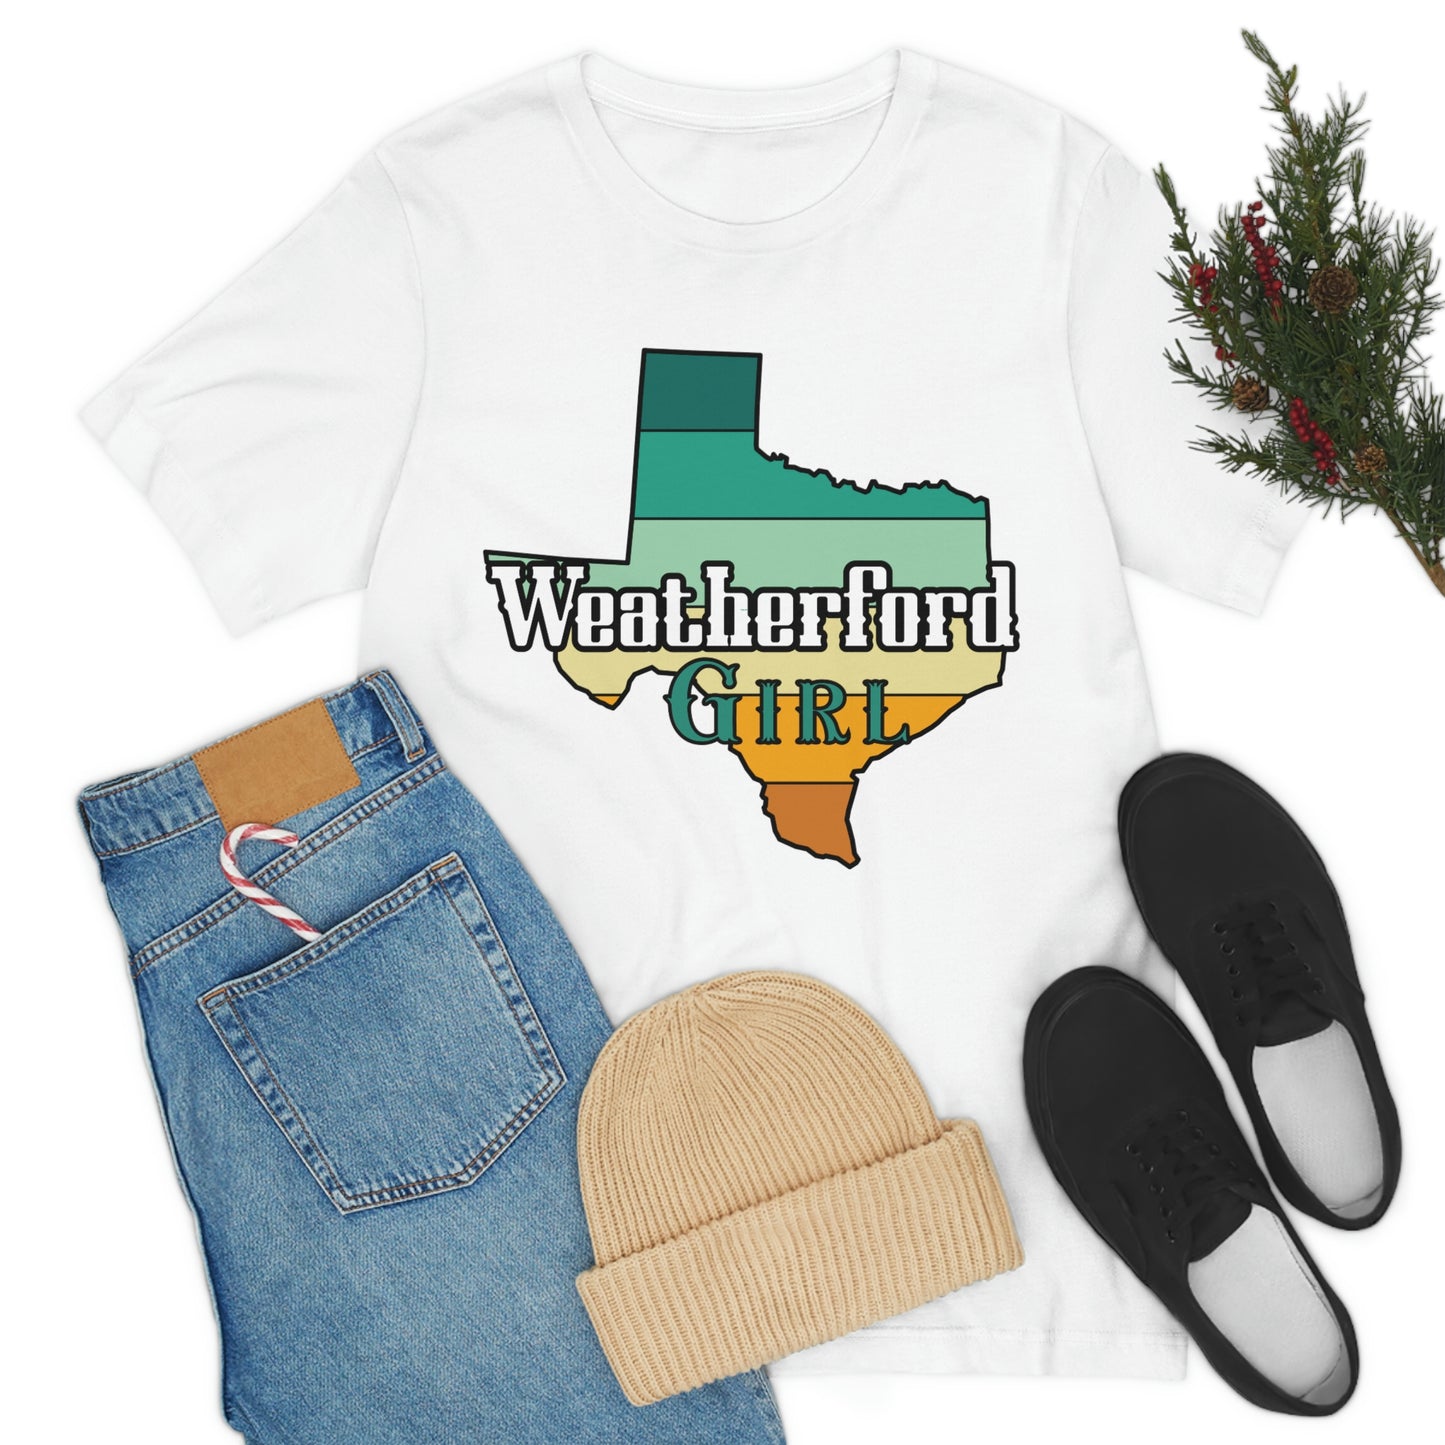 Weatherford Girl Texas State Retro Tee